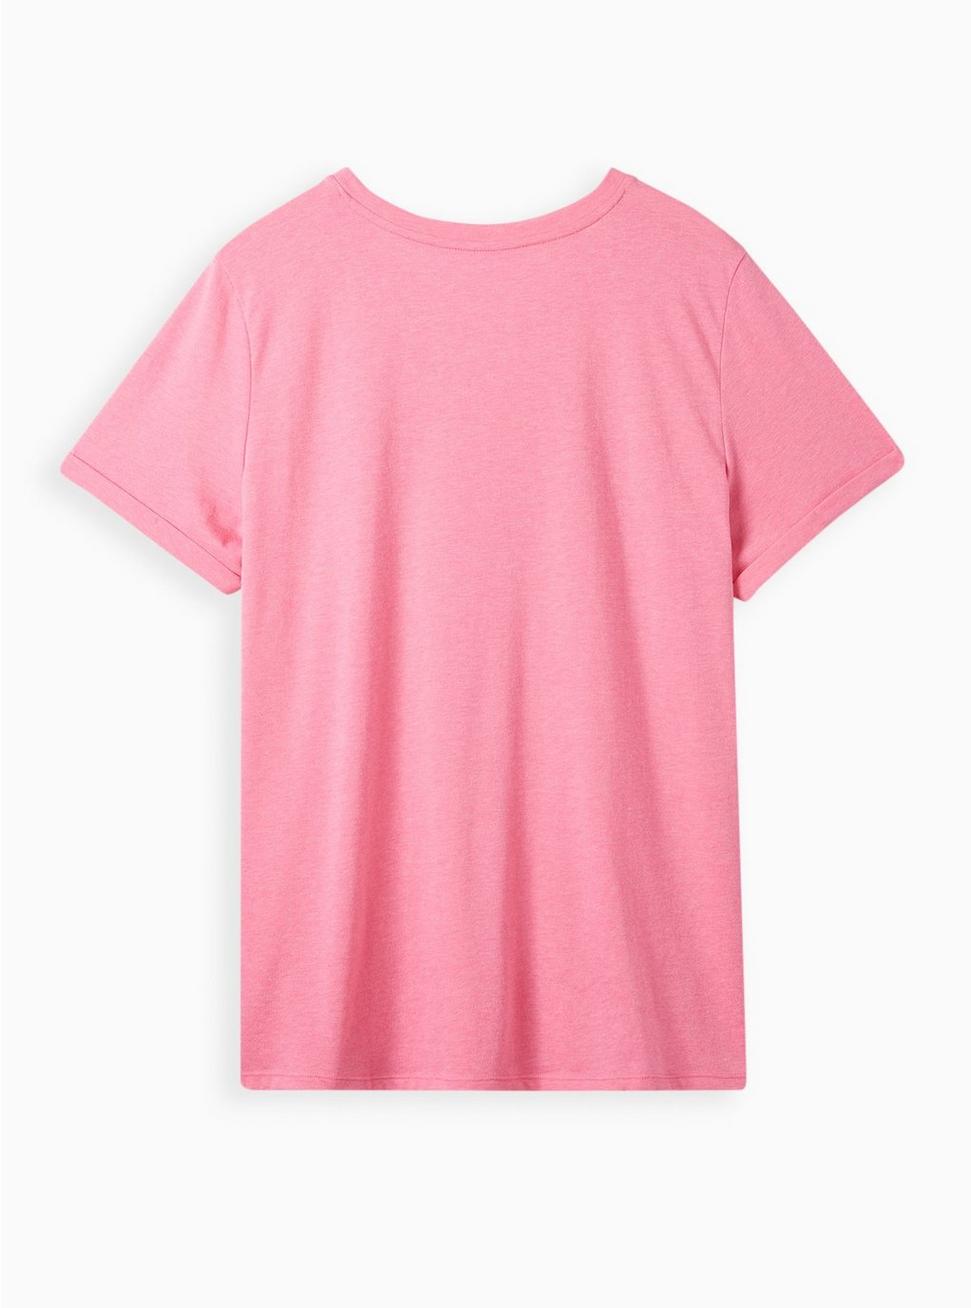 Plus Size - Classic Fit Tee - Signature Jersey Pink Joshua Tree - Torrid